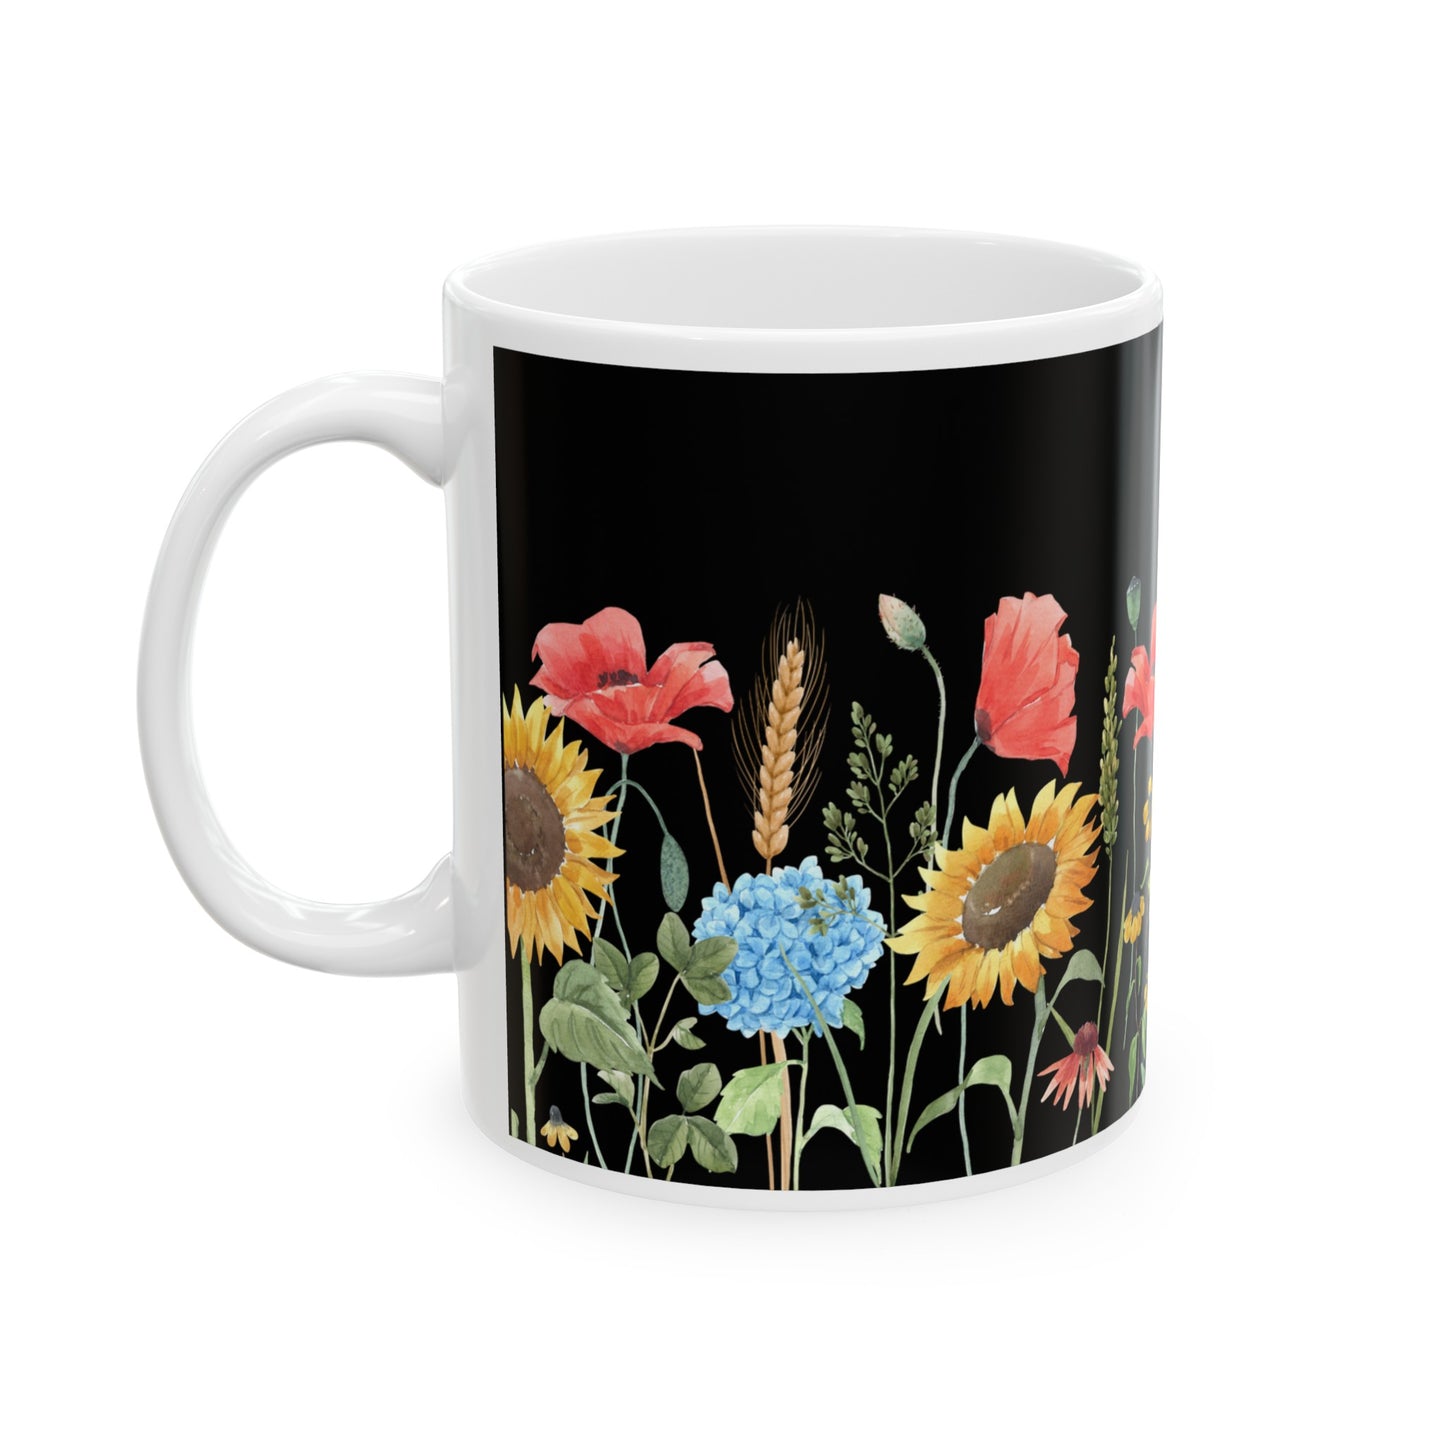 Poppies and Sunflowers on Black - 11oz mug